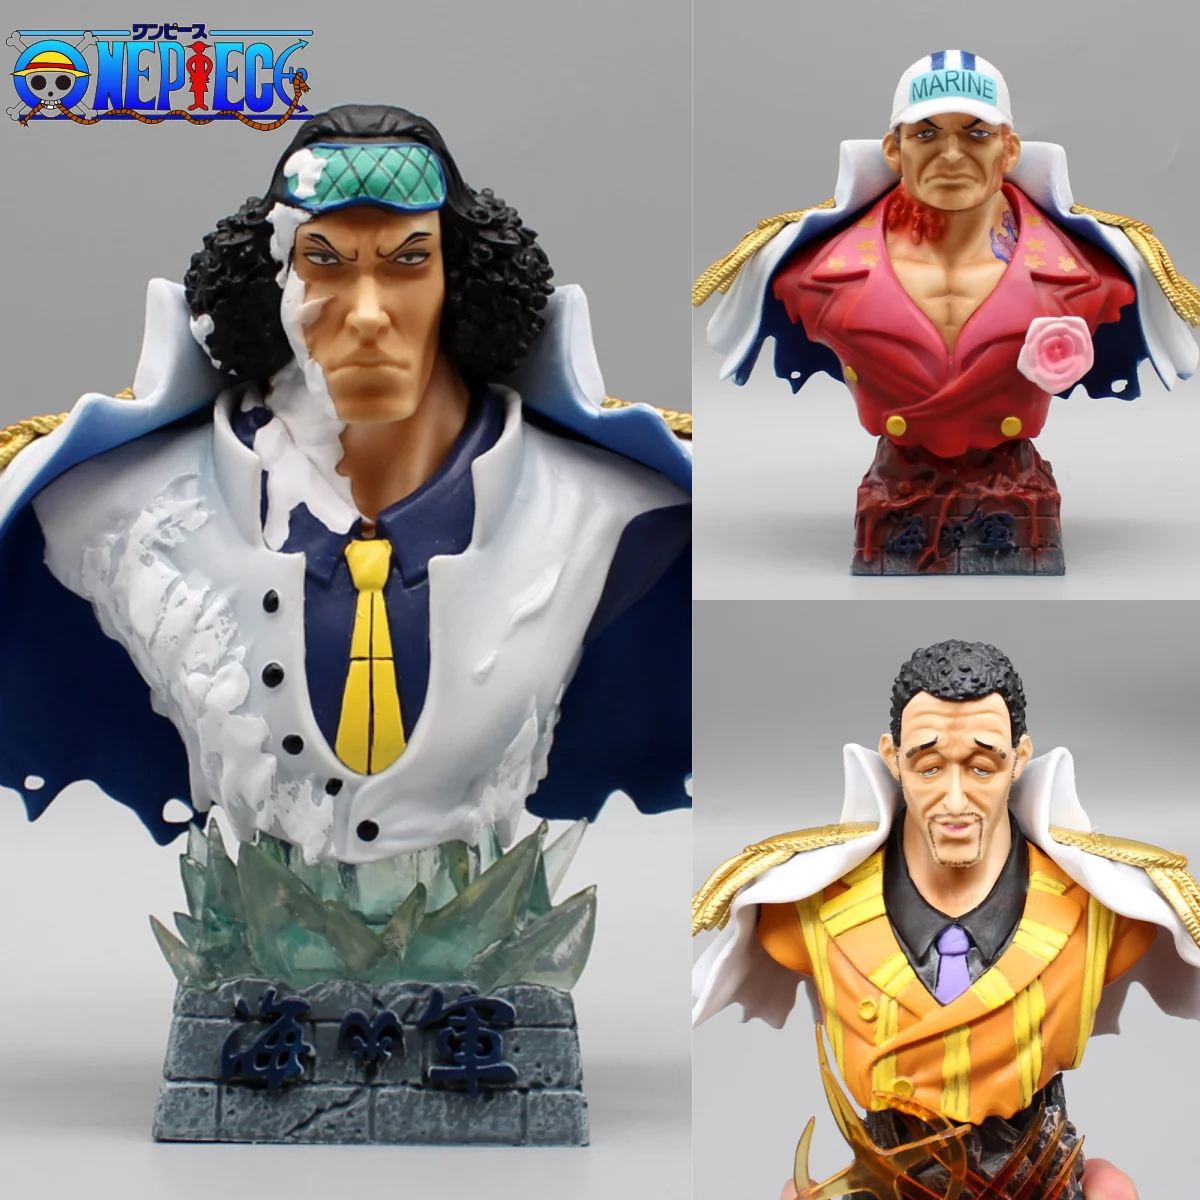 

16cm One Piece Anime 3 Admirals Bust Figures Gk Kizaru Aokiji Akainu Statue Pvc Figurine Collection Model Decoration Toys Gift